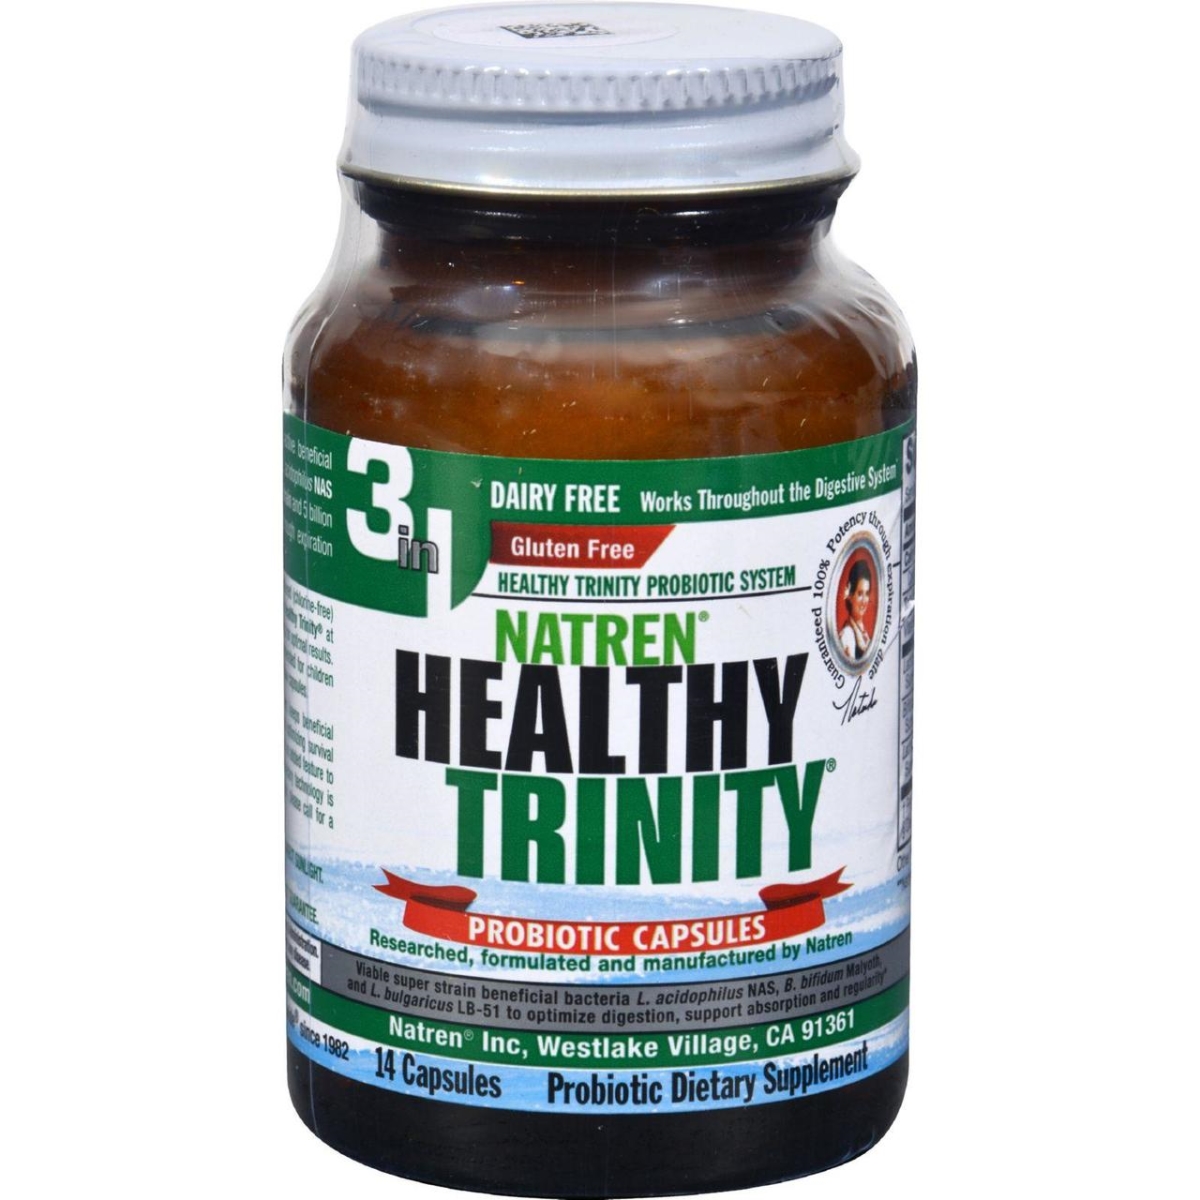 Hg0107631 Healthy Trinity Dairy Free - 14 Caplets